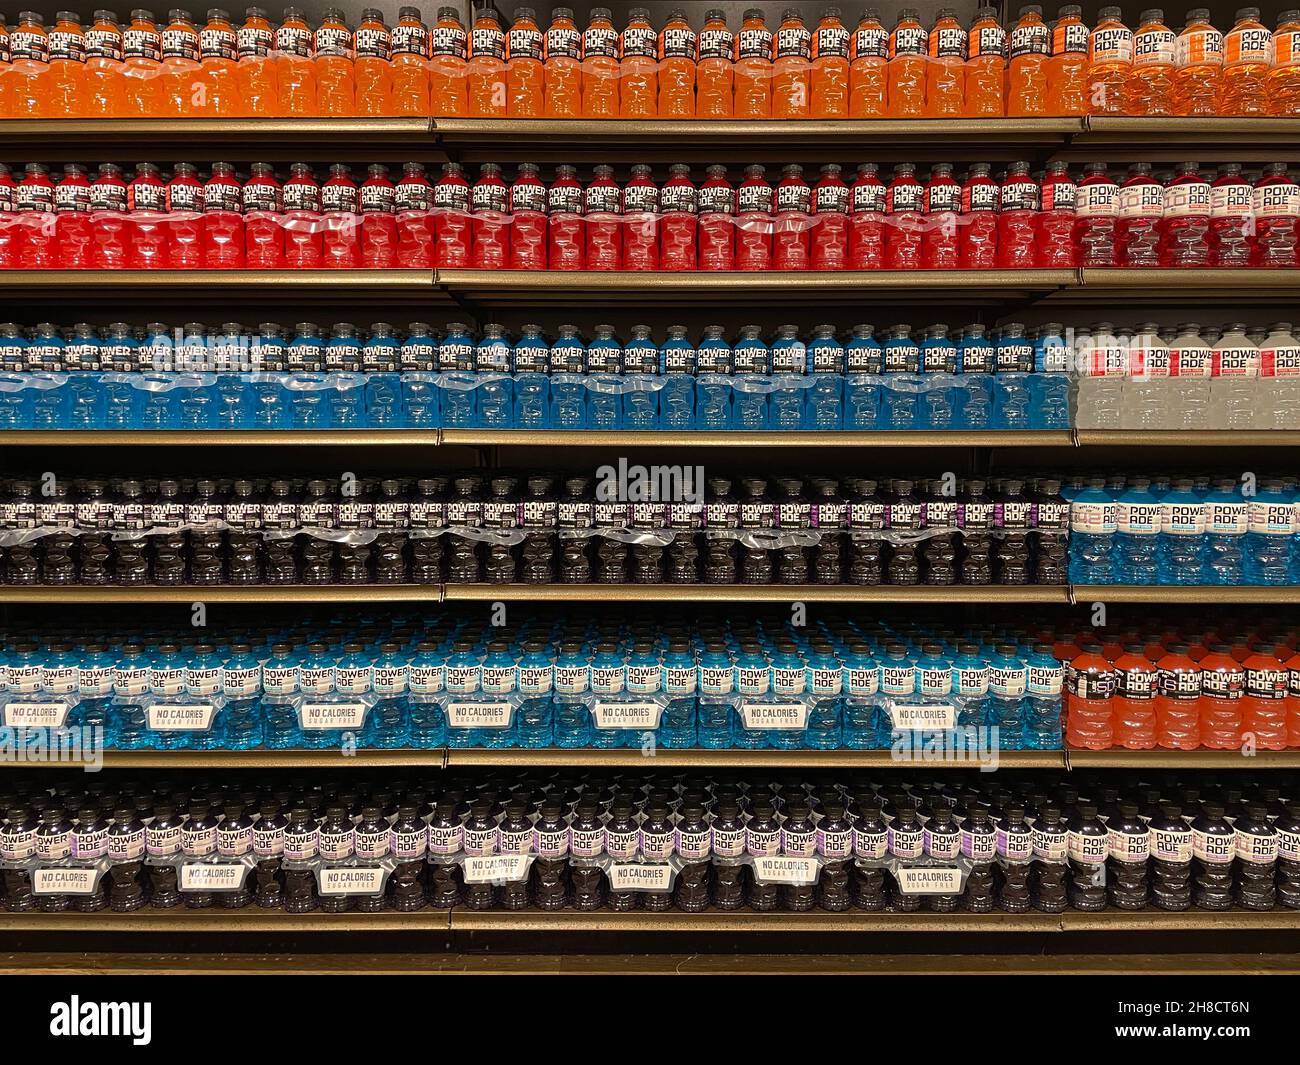 Augusta, Ga USA - 07 01 21: Powerade drink colorful display wall background Stock Photo